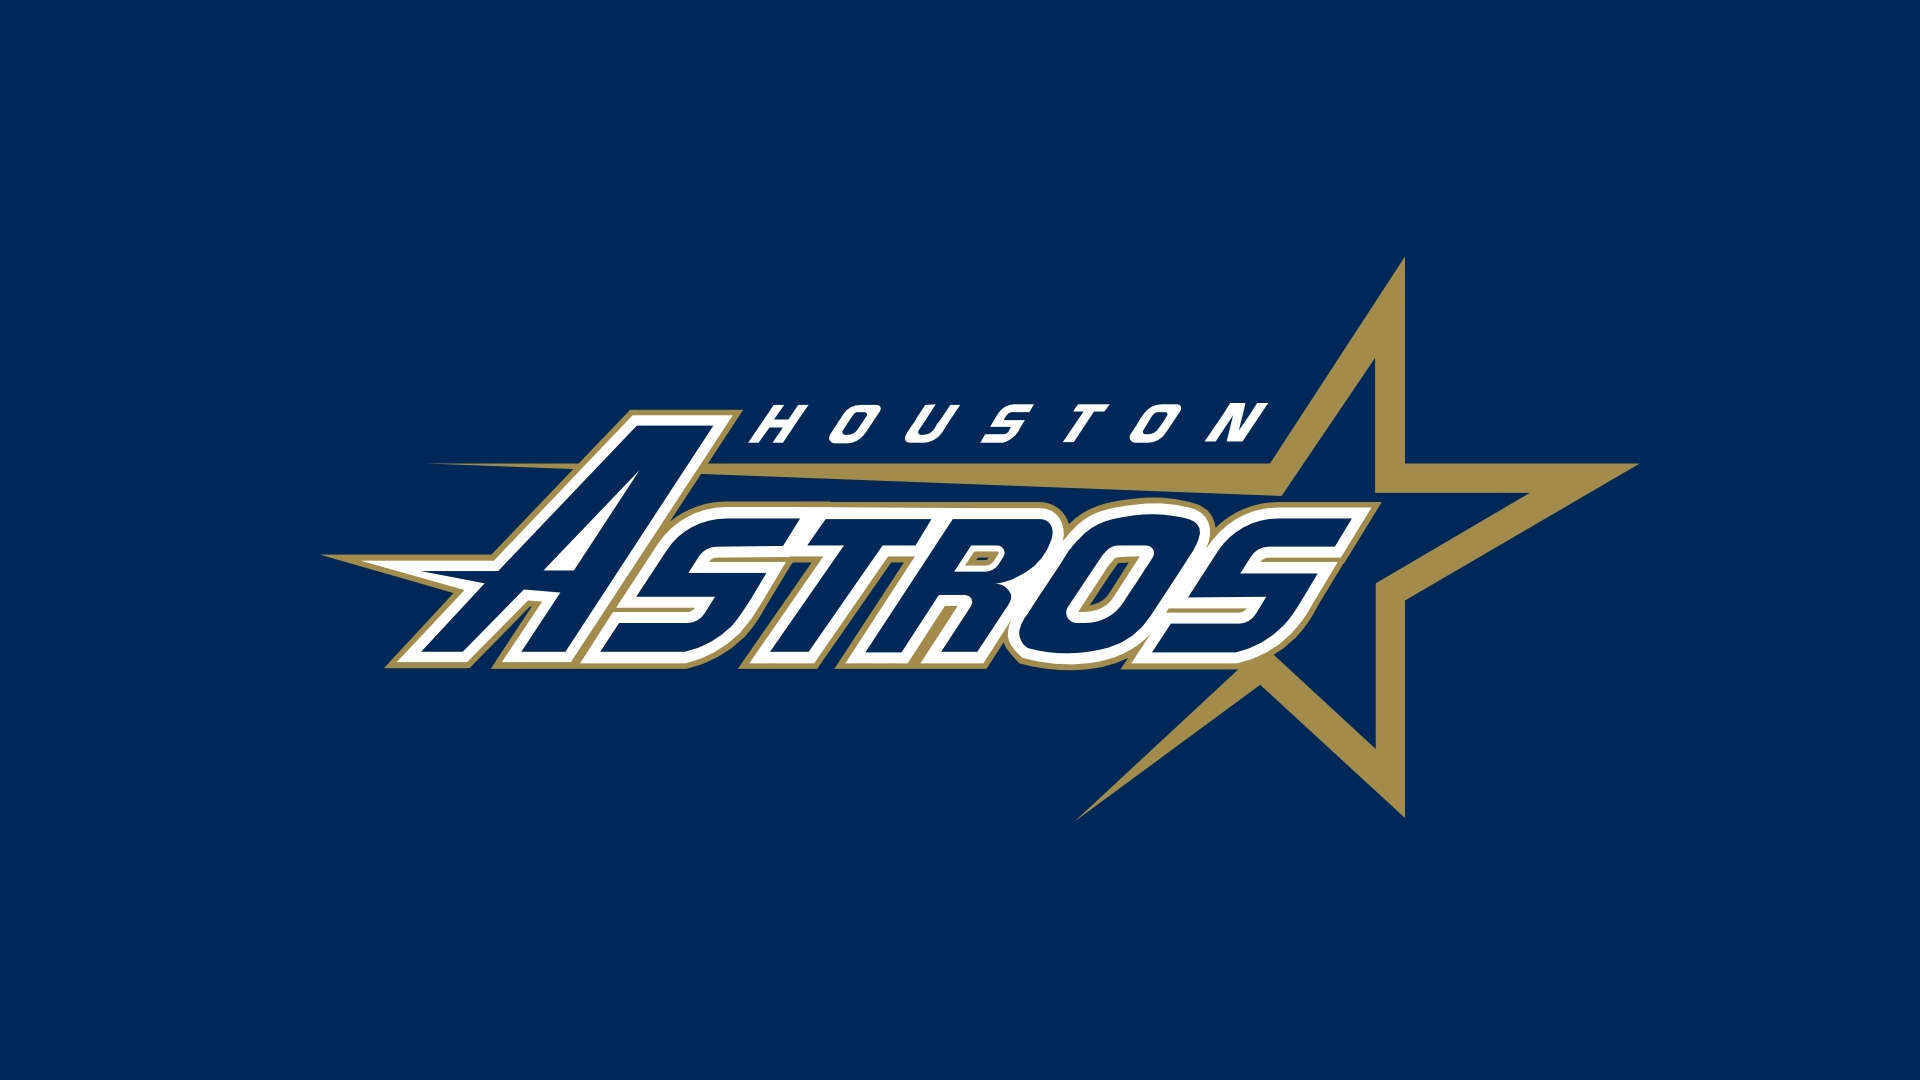 1920x1080 Houston Astros Full HD Images